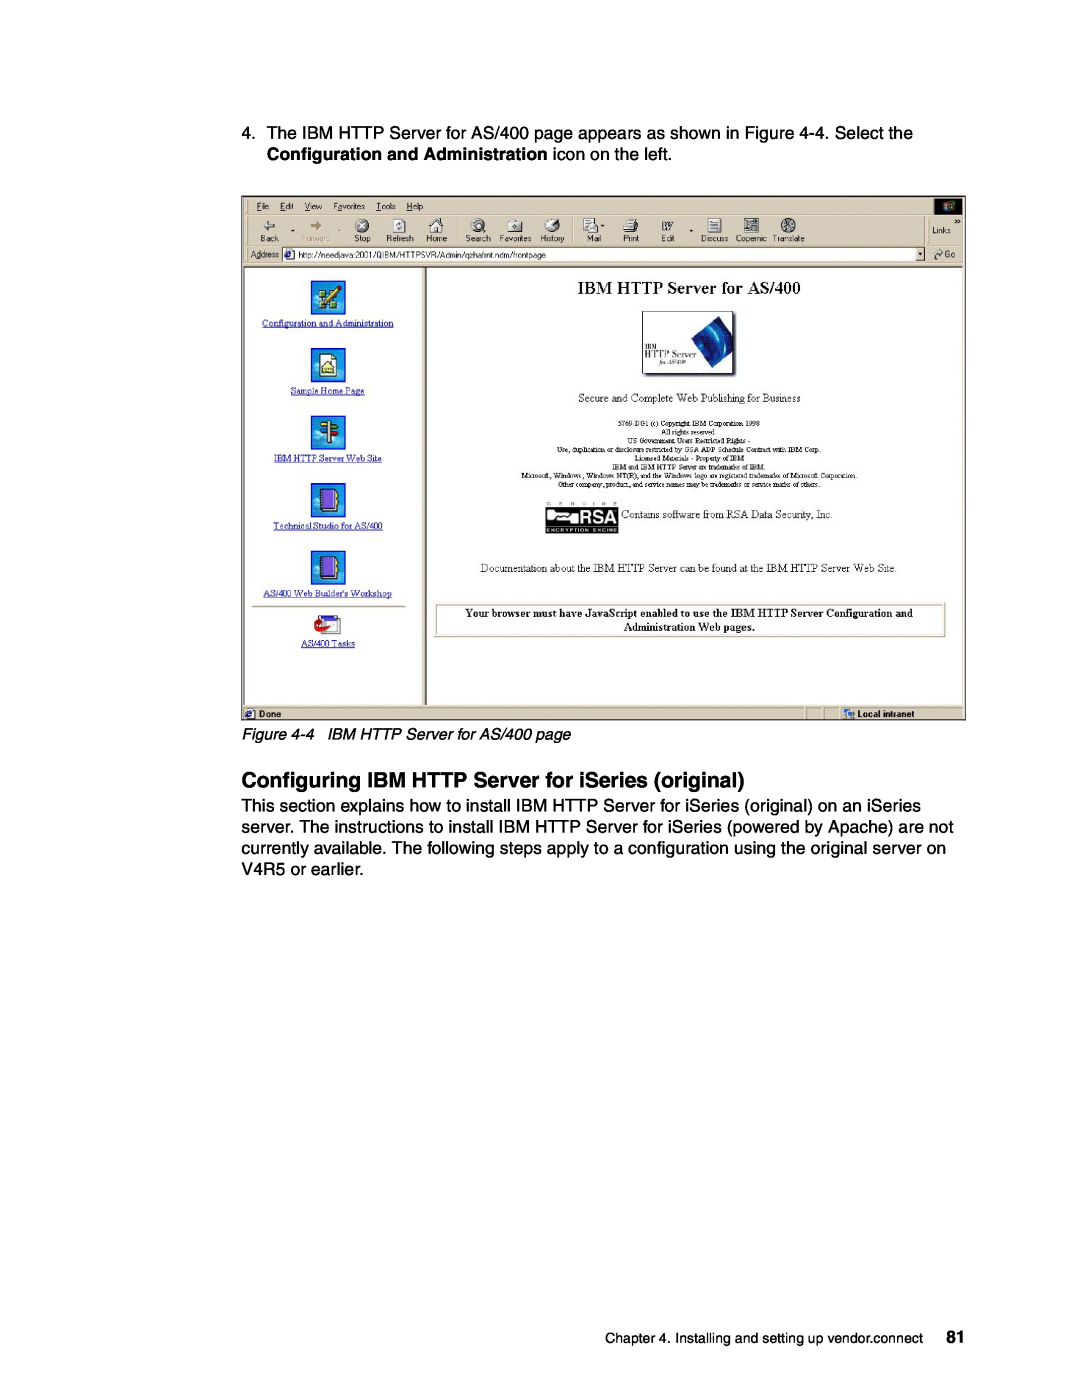 IBM SG24-6526-00 manual Configuring IBM HTTP Server for iSeries original, 4 IBM HTTP Server for AS/400 page 